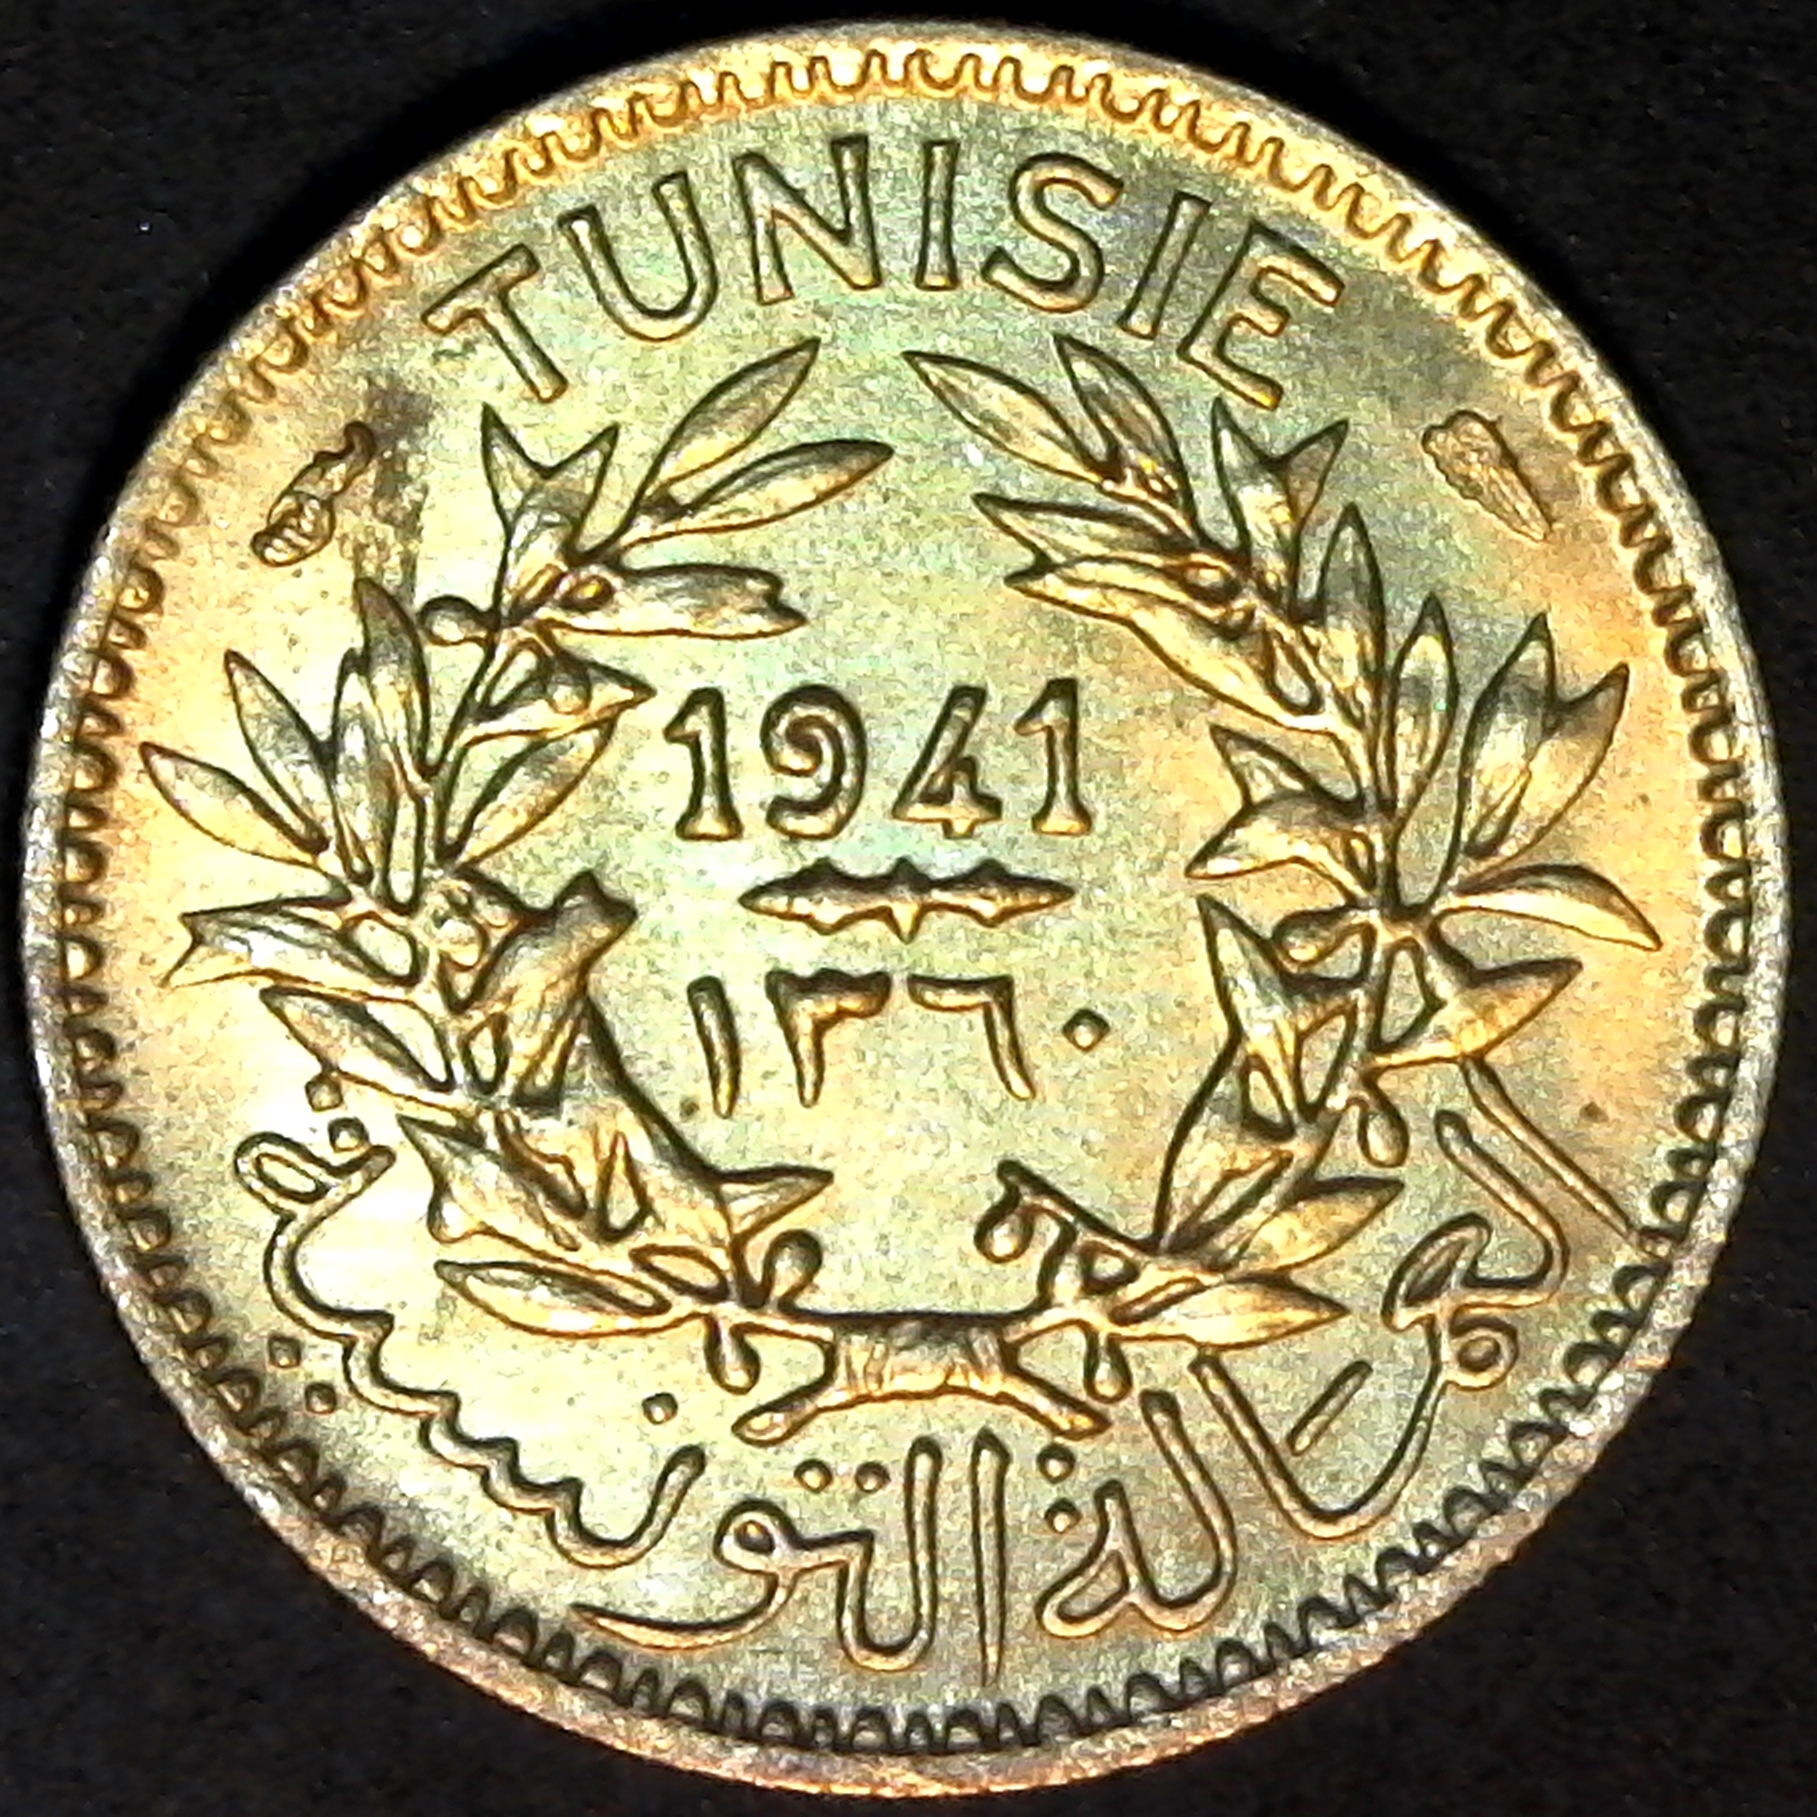 Tunisia 50 Centimes 1941 obverse.jpg